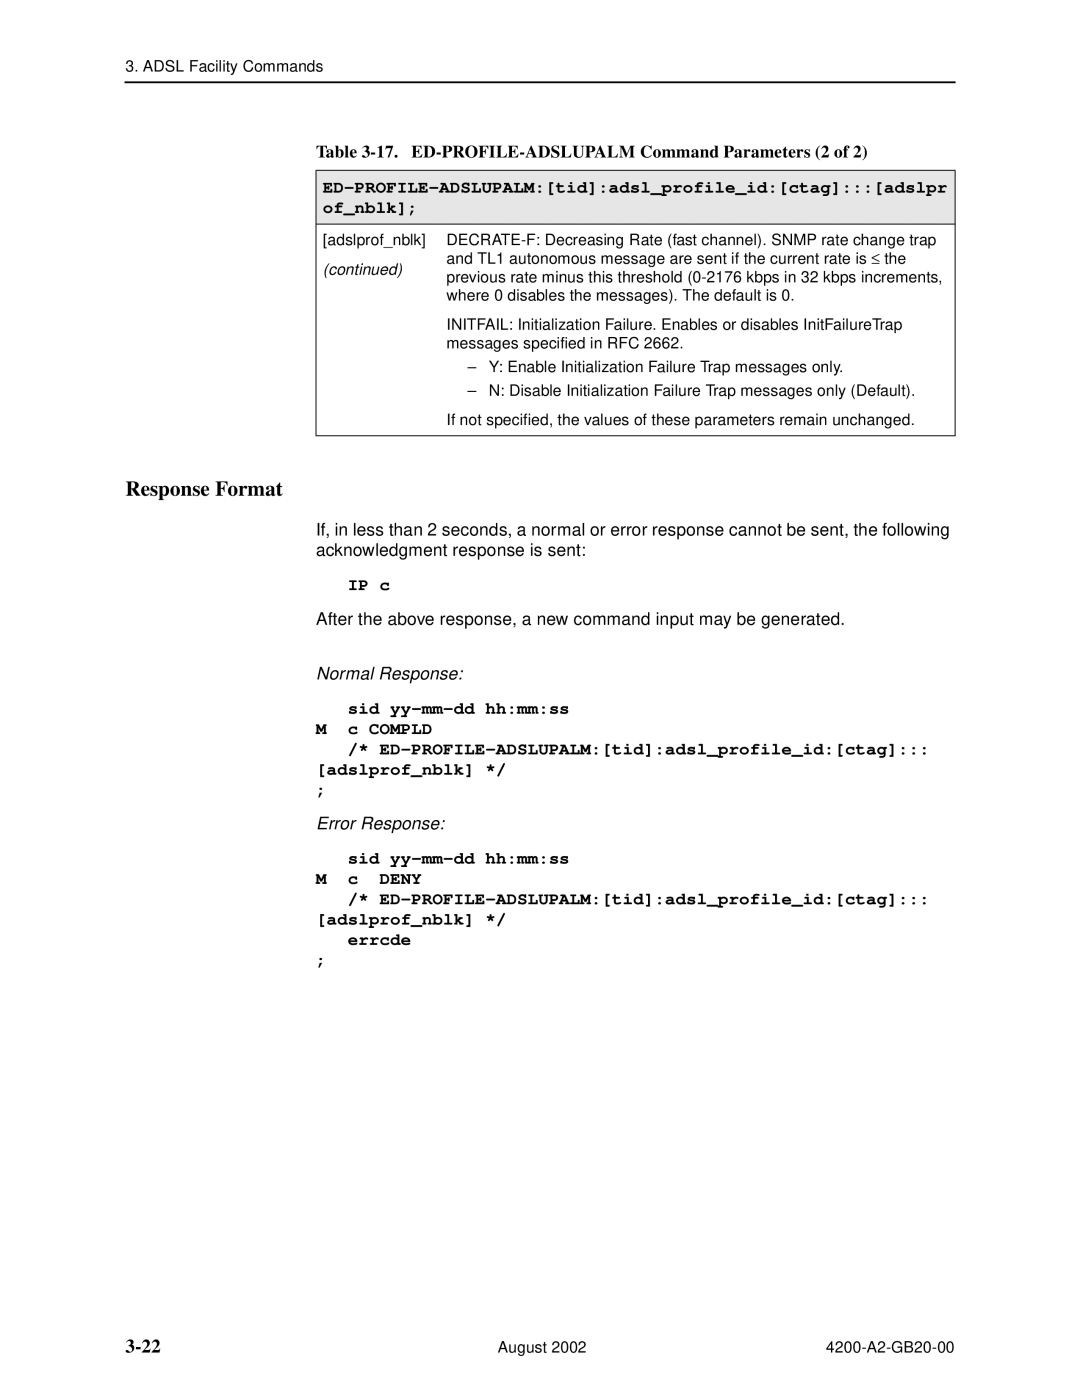 Paradyne 4200 manual 3-22, 17. ED-PROFILE-ADSLUPALM Command Parameters 2 of, Response Format, IP c, Normal Response 